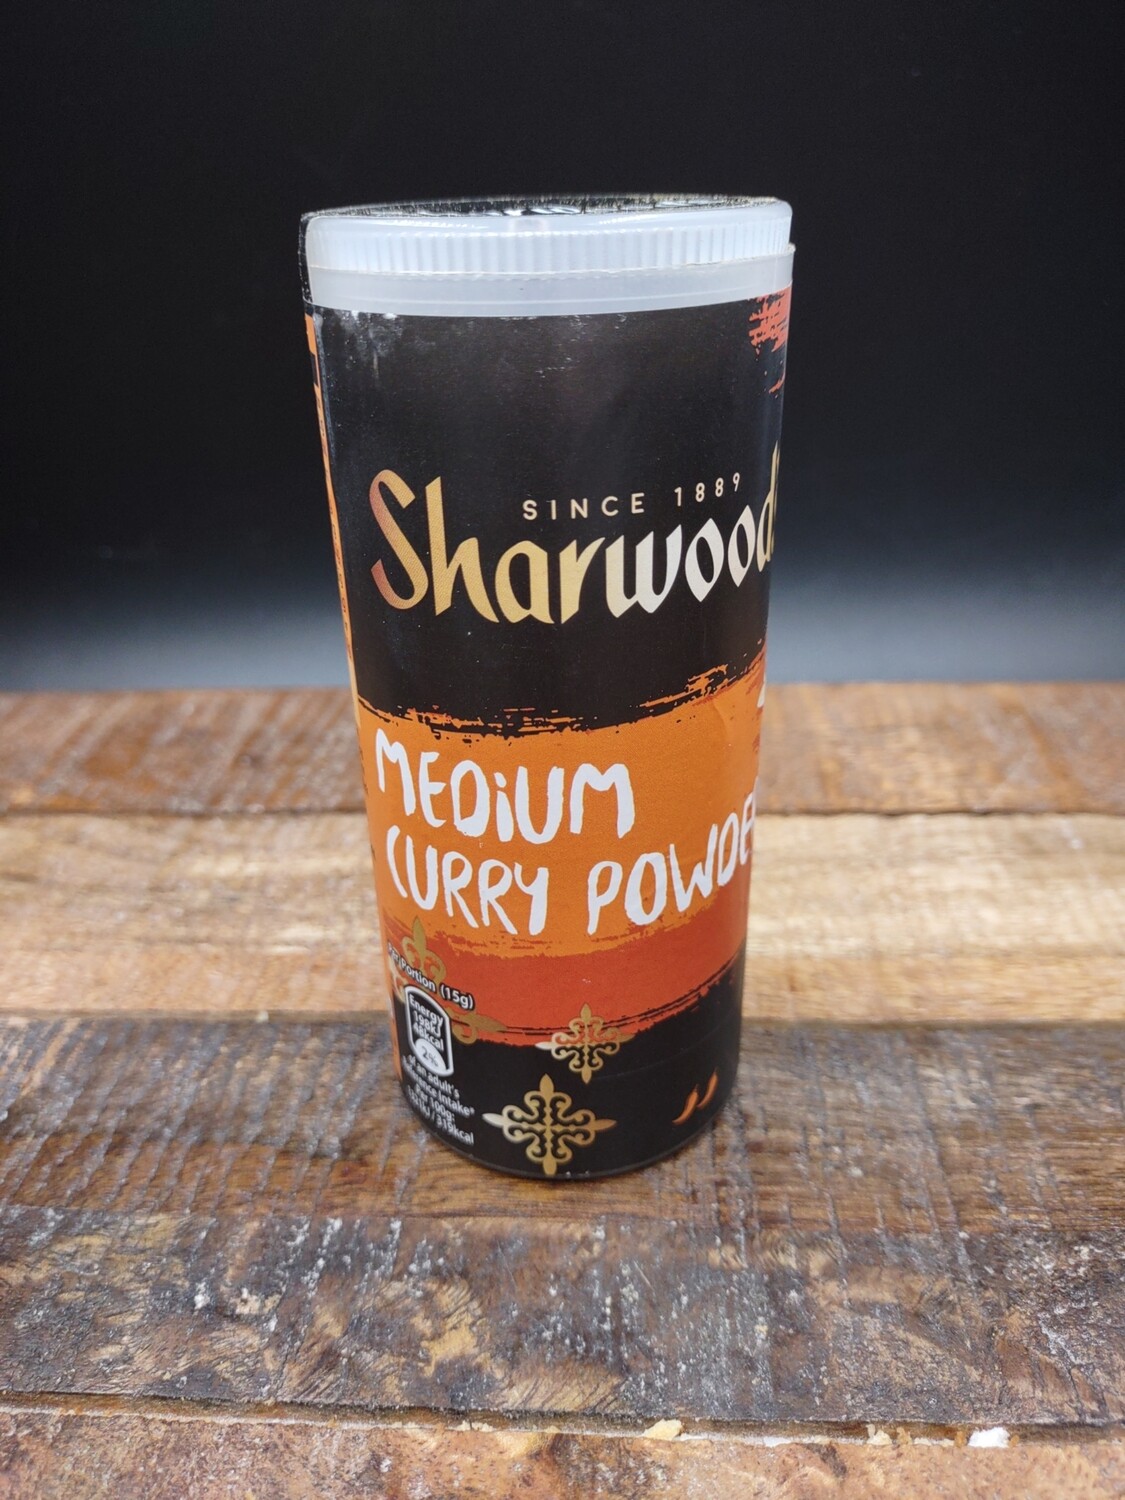 Sharwoods Medium Curry Powder 102g